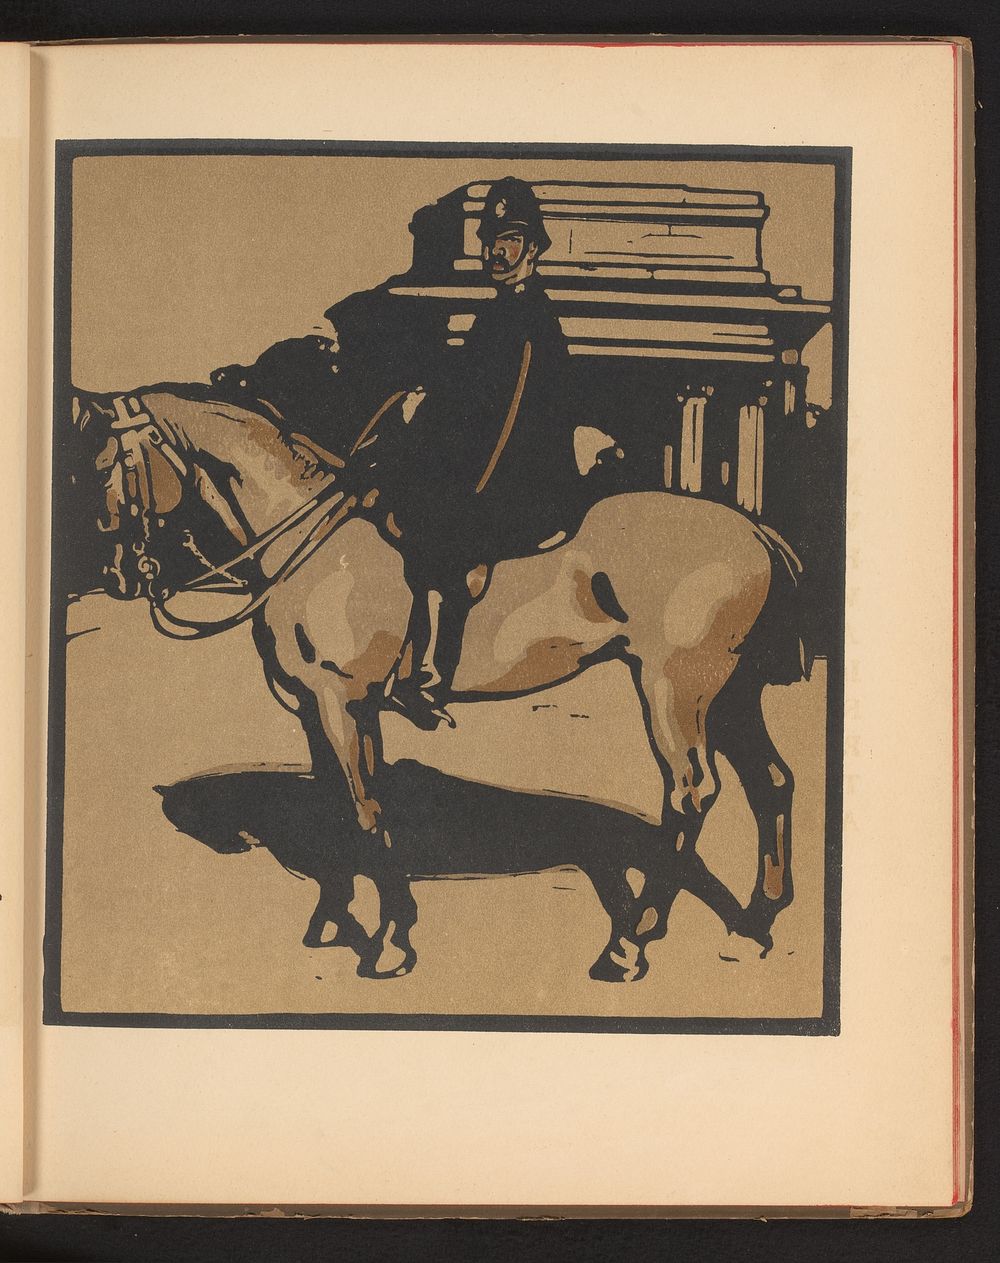 Politieman op een paard (1898) by William Nicholson and William Ernest Henley